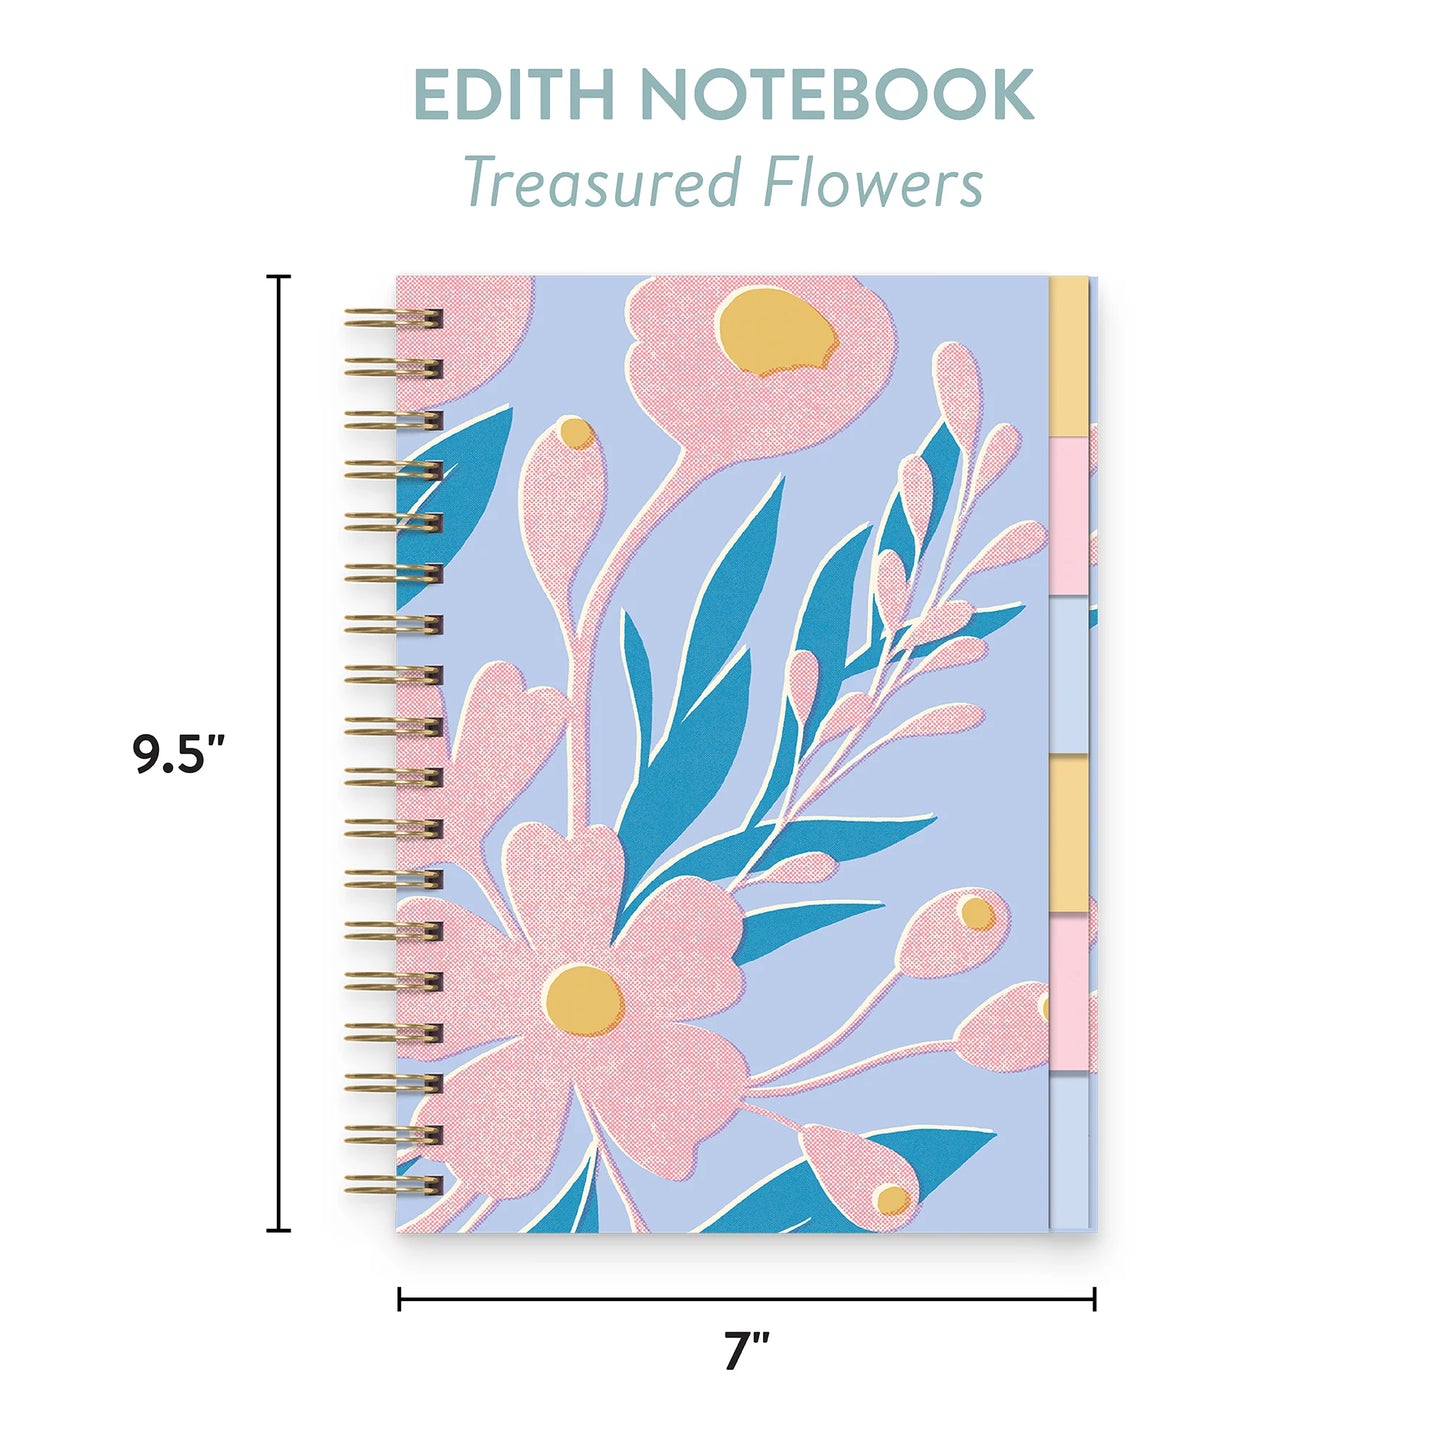 Treasured Flowers Edith Notebook